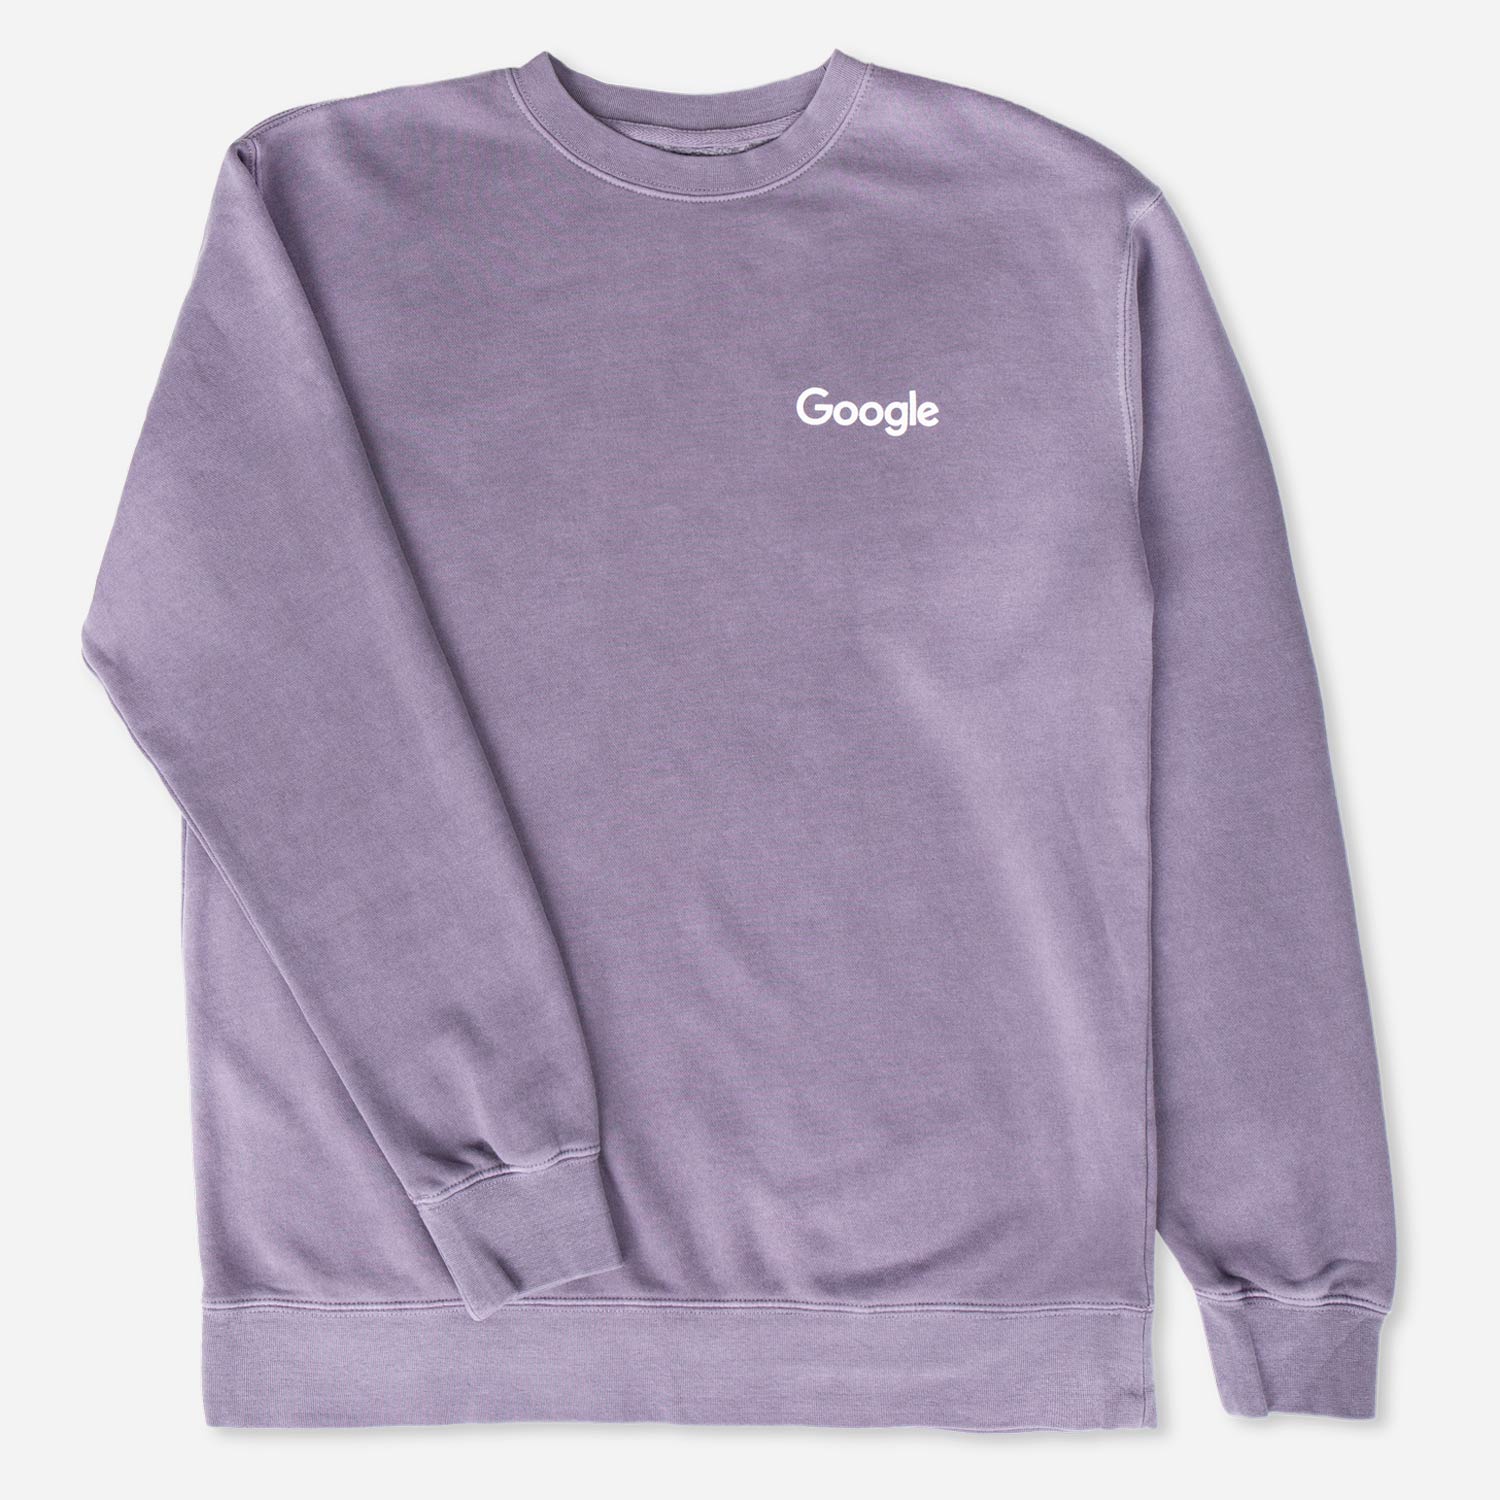 Google Vintage Washed Plum Sweatshirt